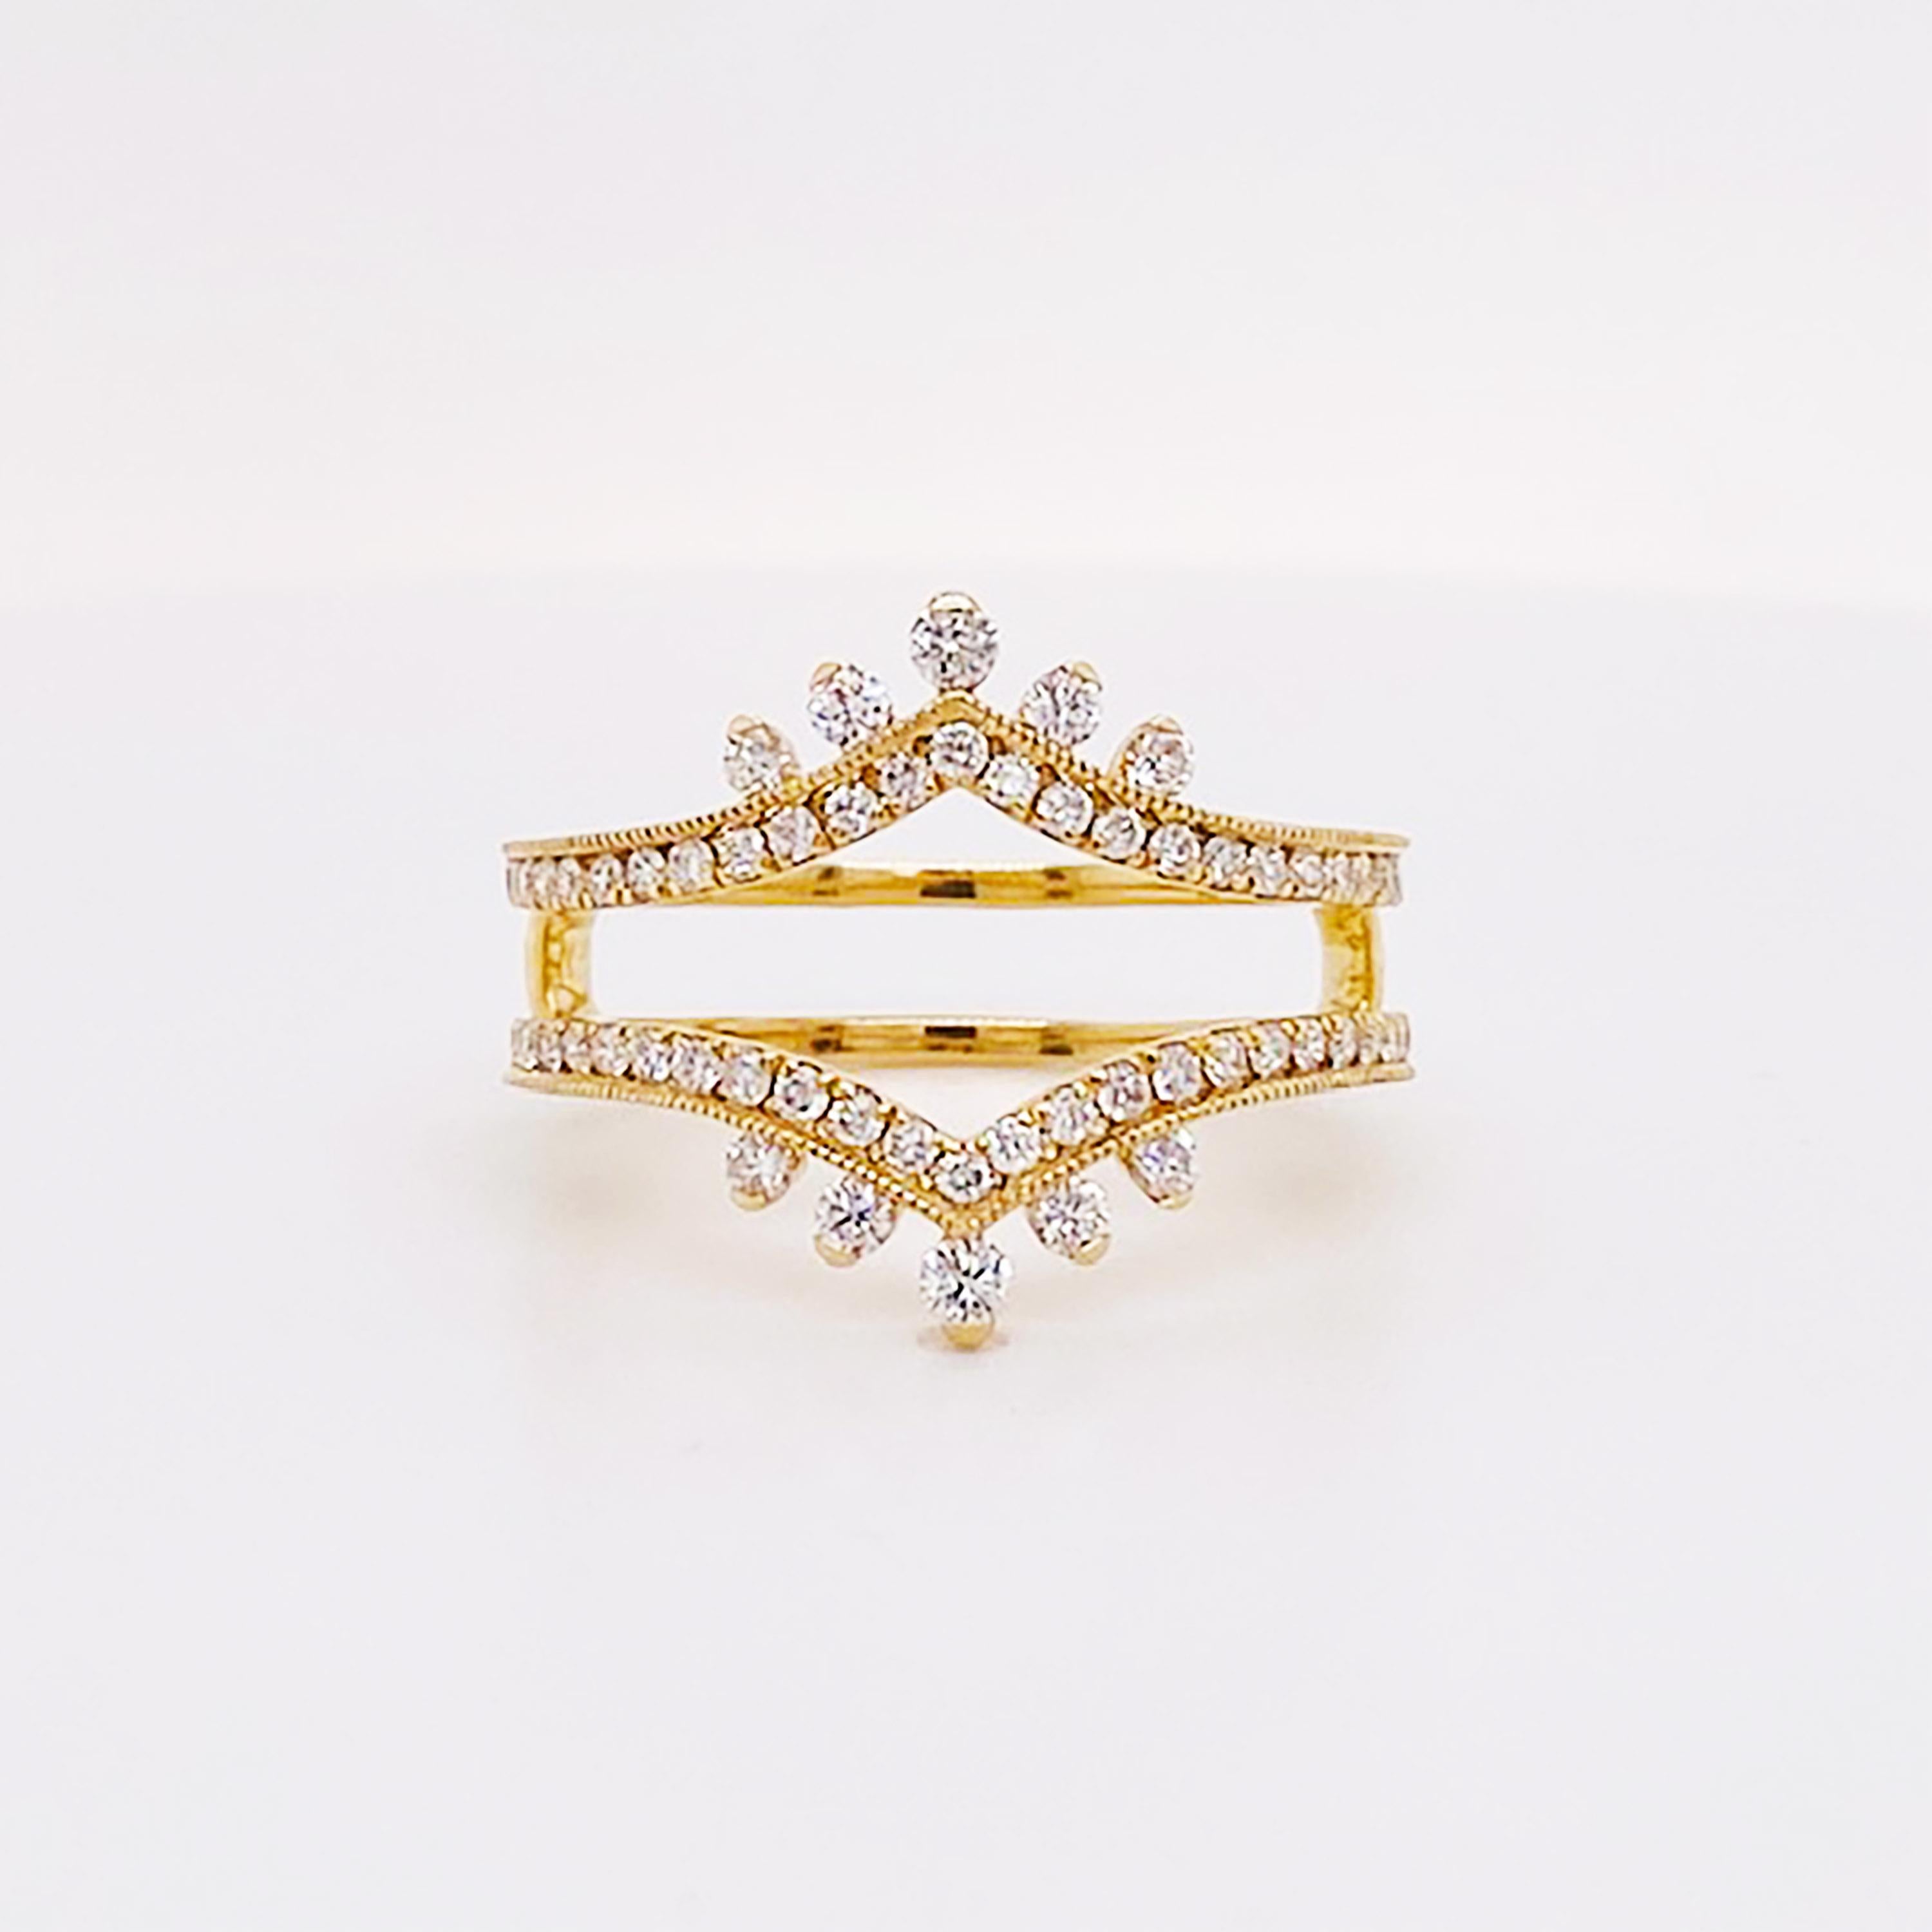 For Sale:  Diamond Crown Ring Enhancer 14K Gold .55 Carat Diamond Ring Guard Wedding Band 5